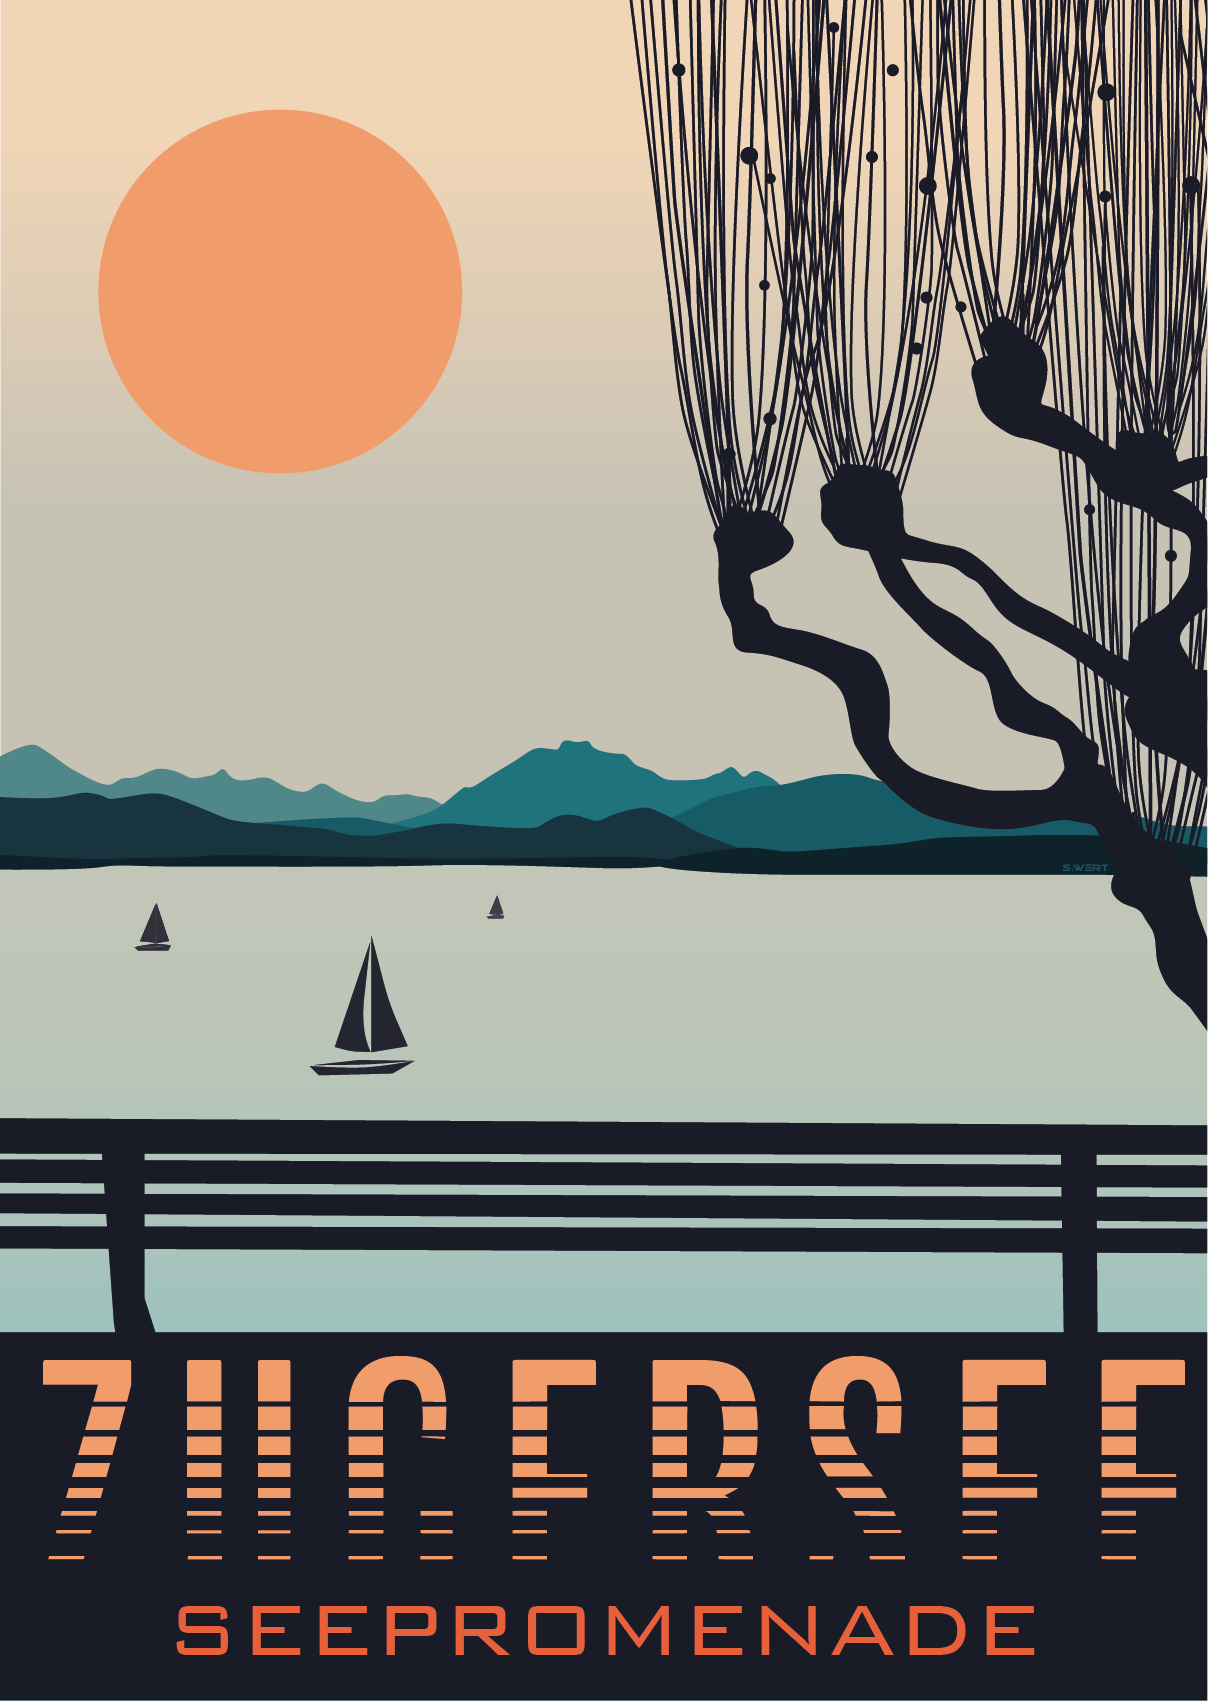 Zug Poster: Zuger See